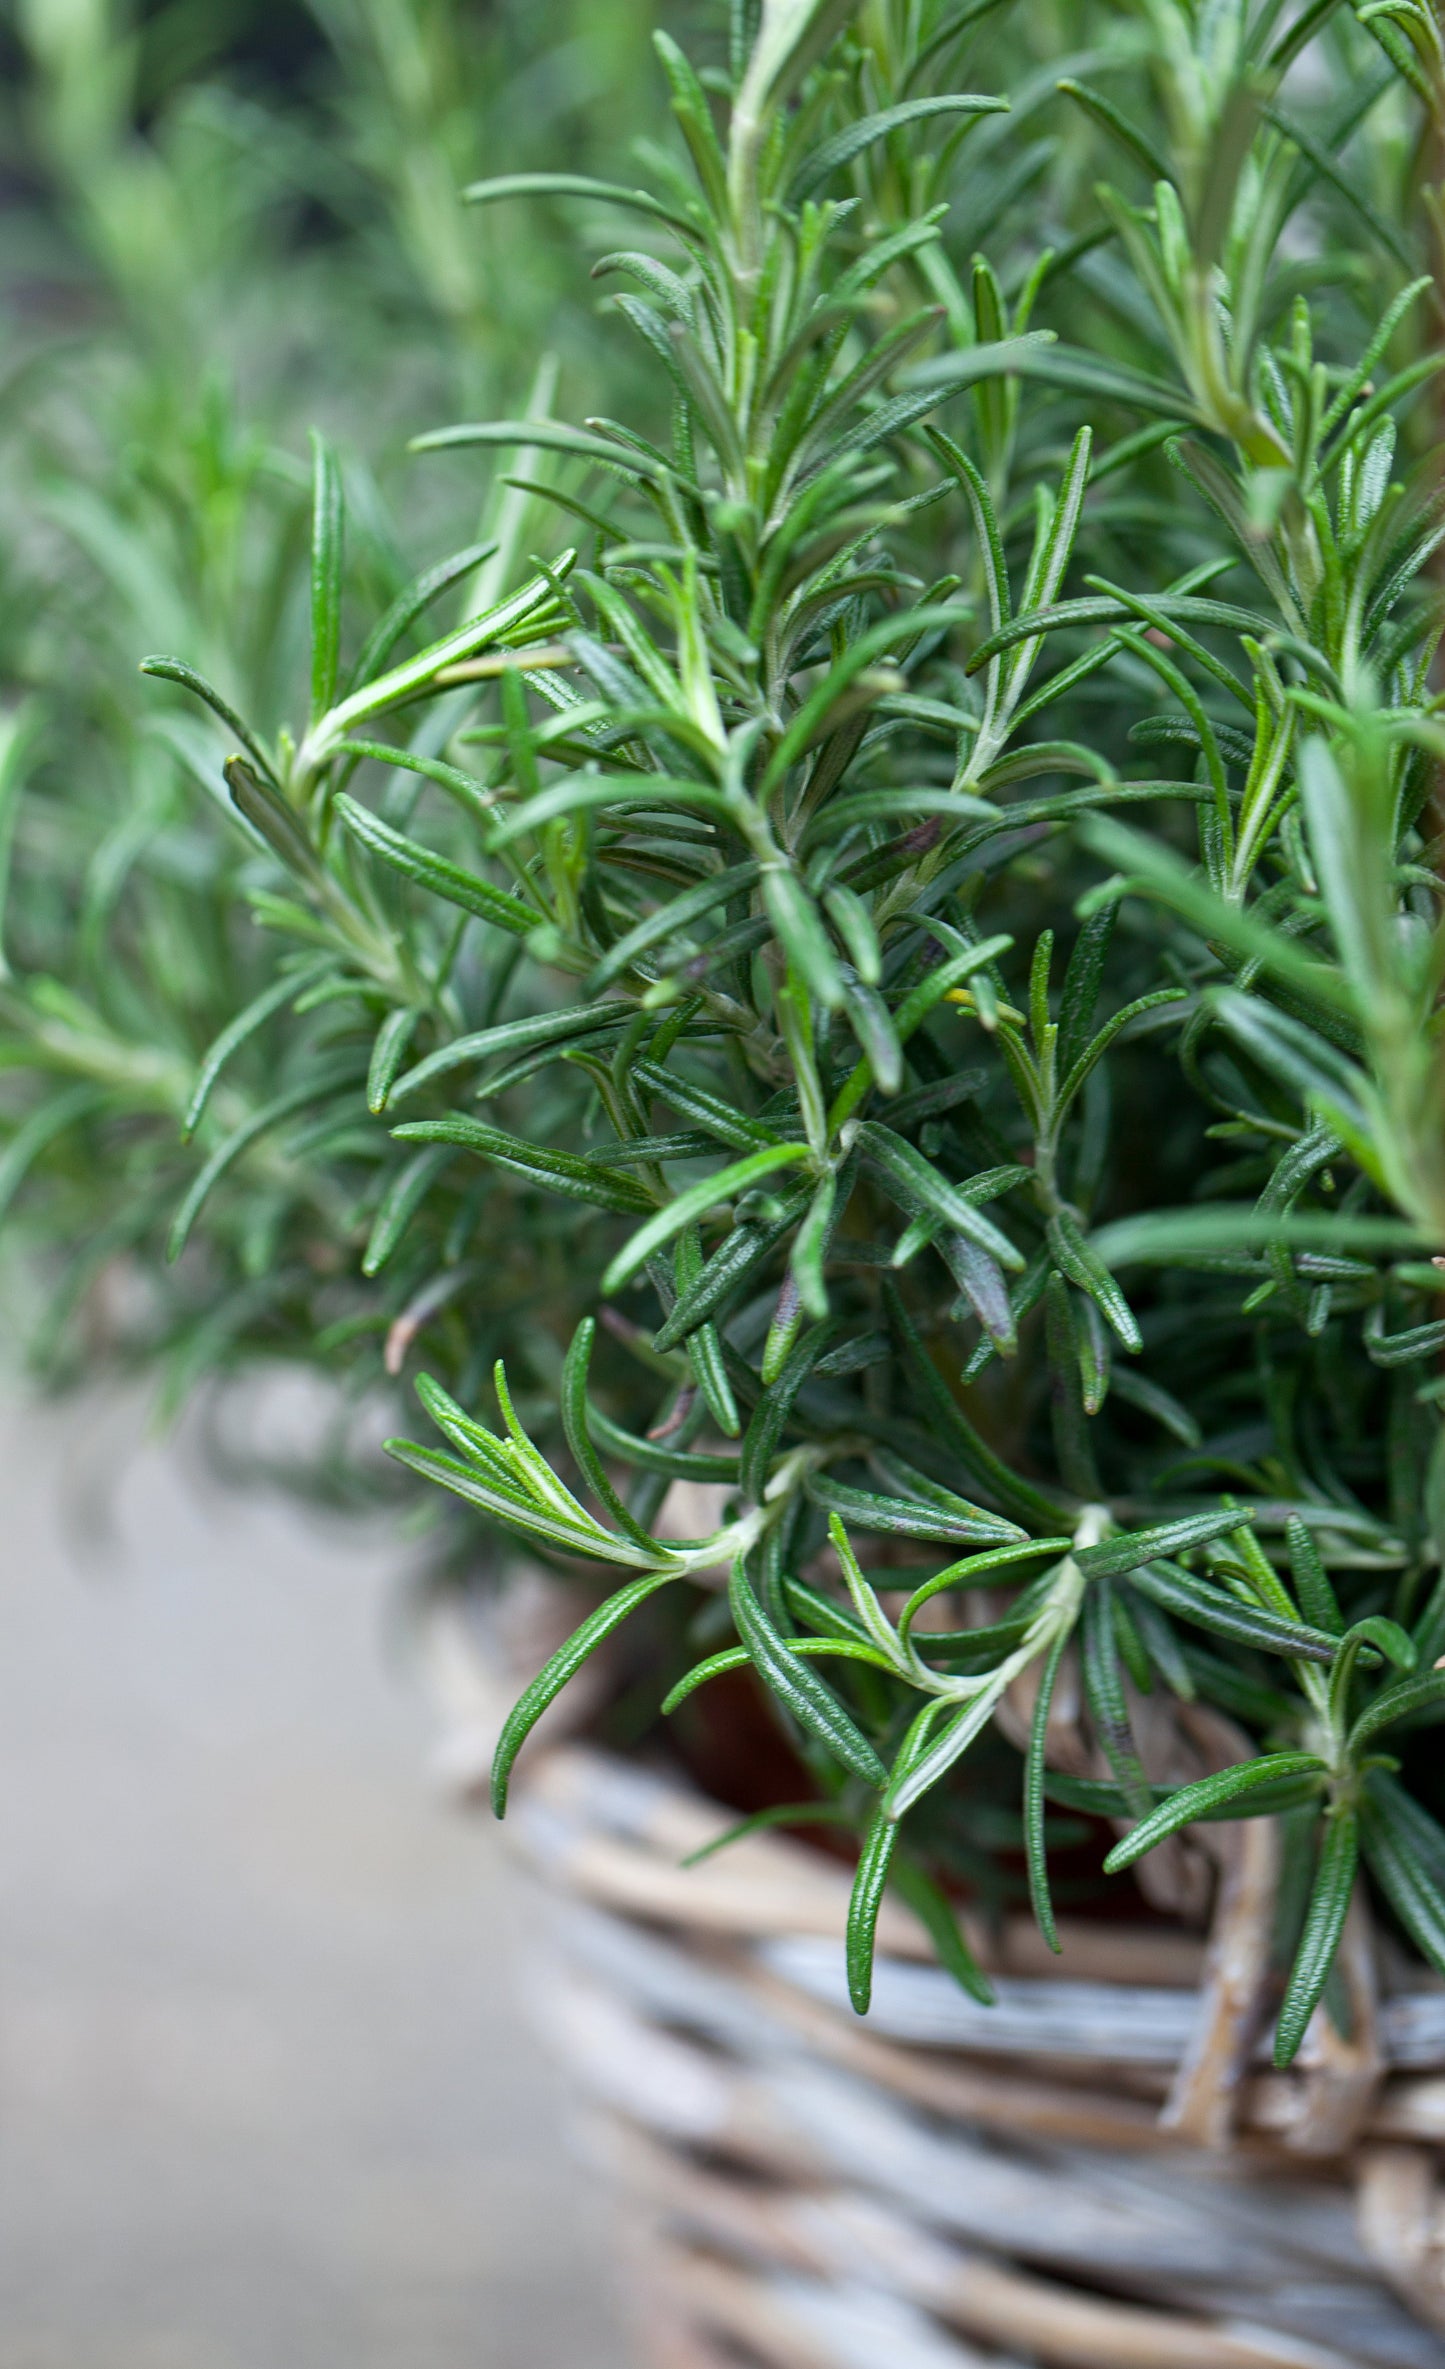 Herb Plants - Rosemary 'Mrs Jessops' - 2 x Full Plants in 9cm pots